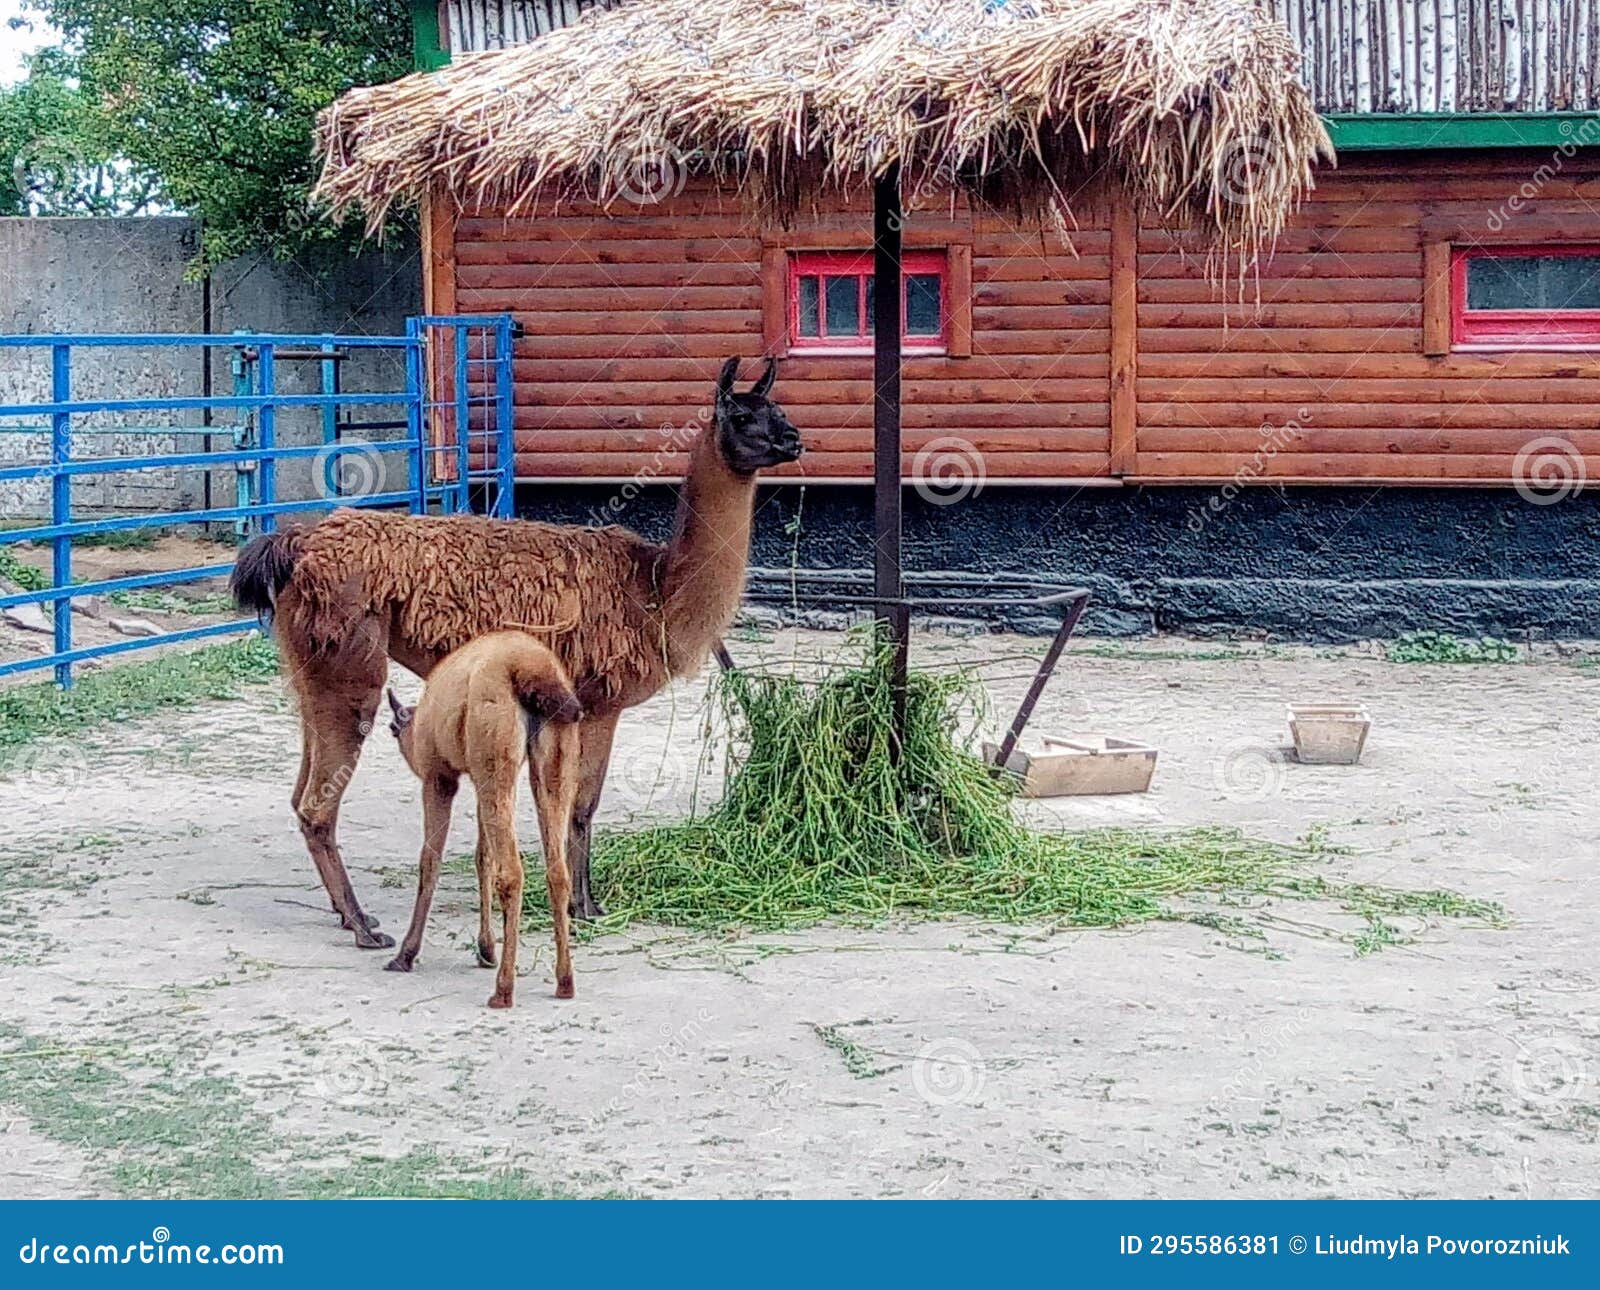 llama at cocora valley, quindio, colombia. south amercia animals.